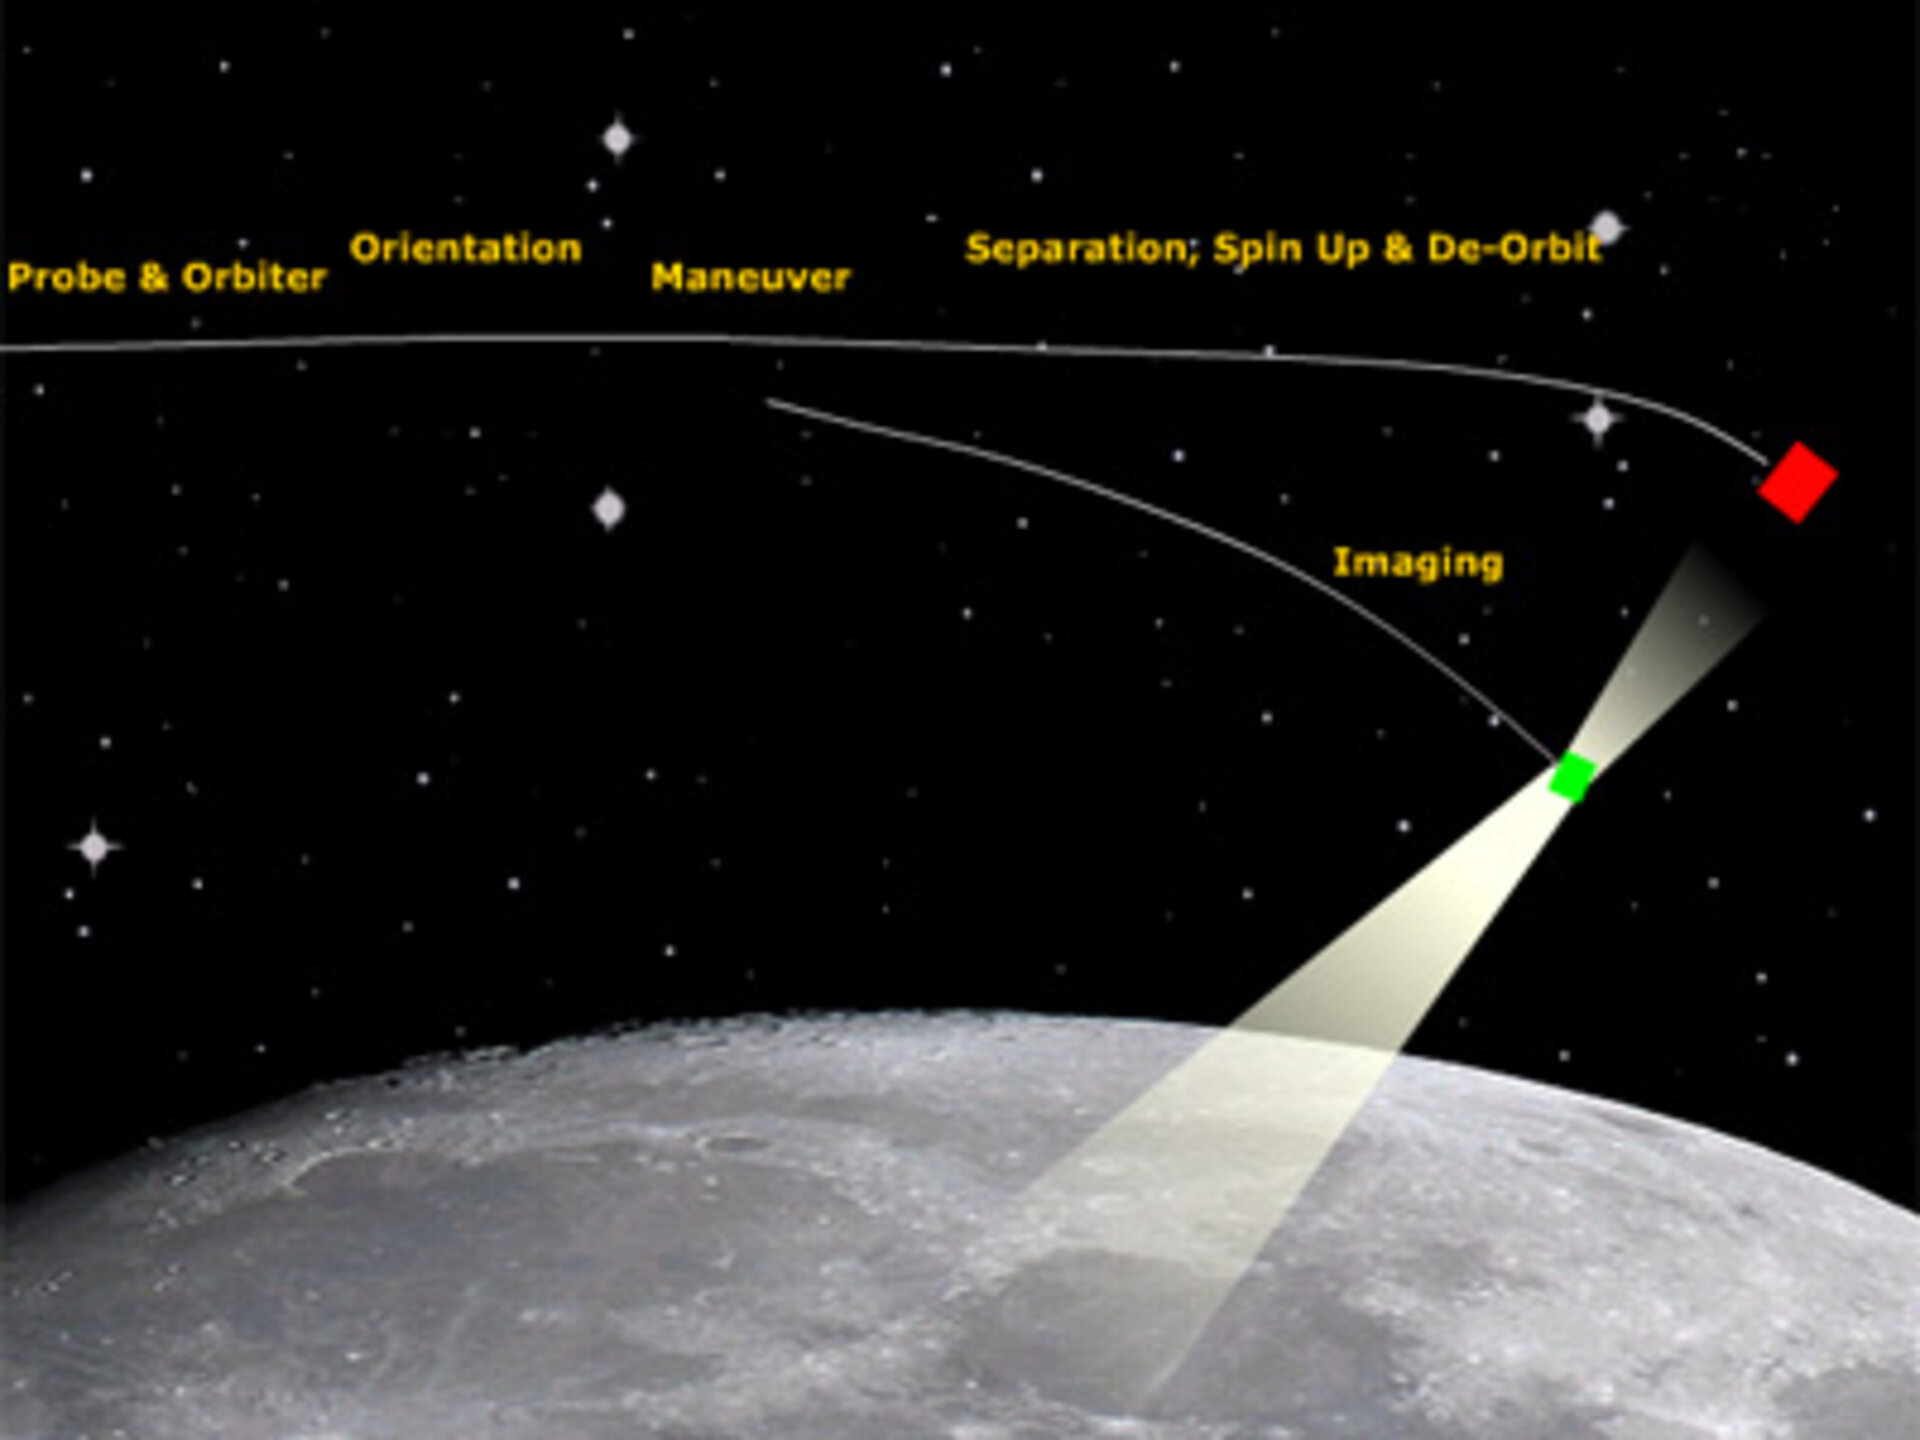 Chandrayaan-1’s  landing probe separates from the orbiter